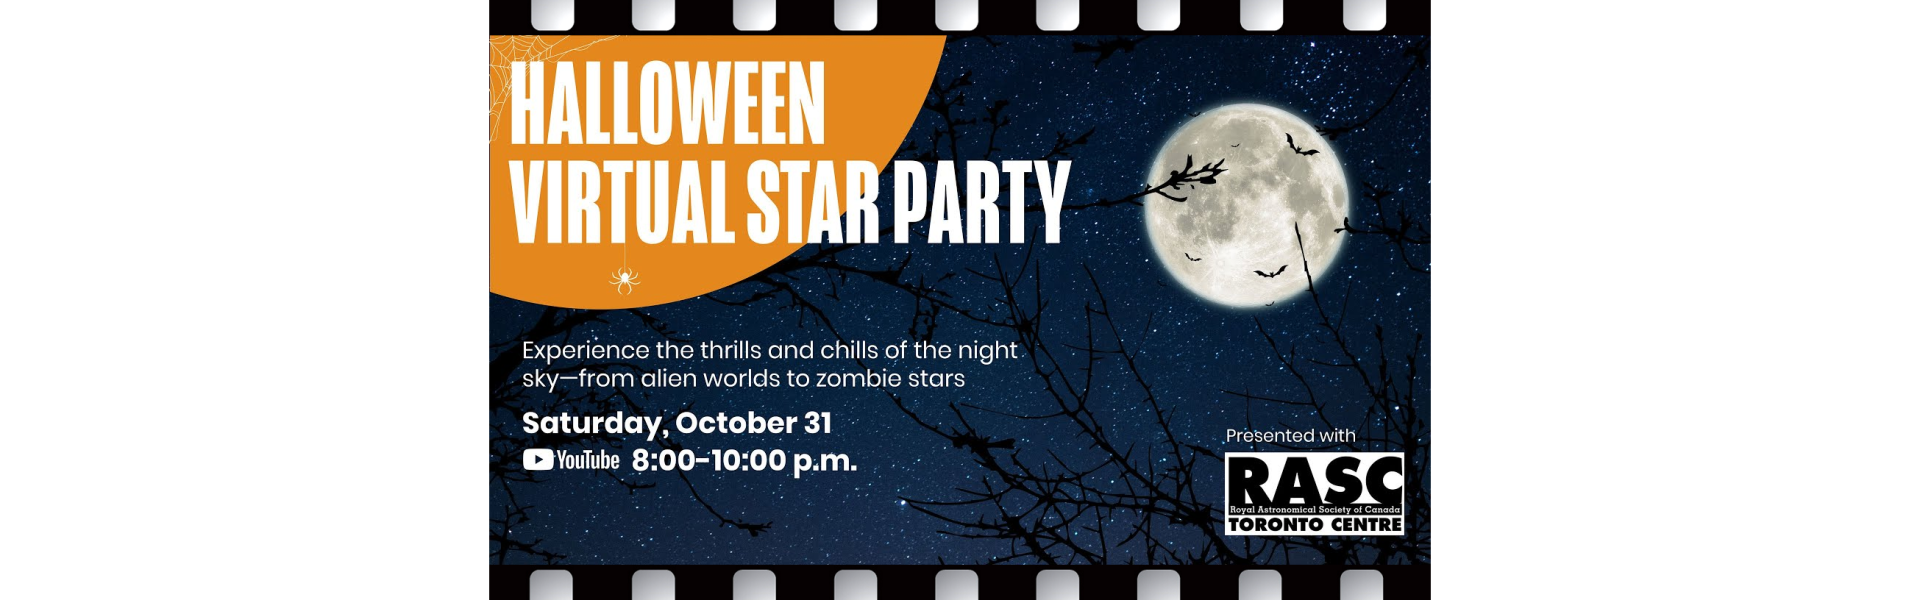 Halloween Virtual Star Party